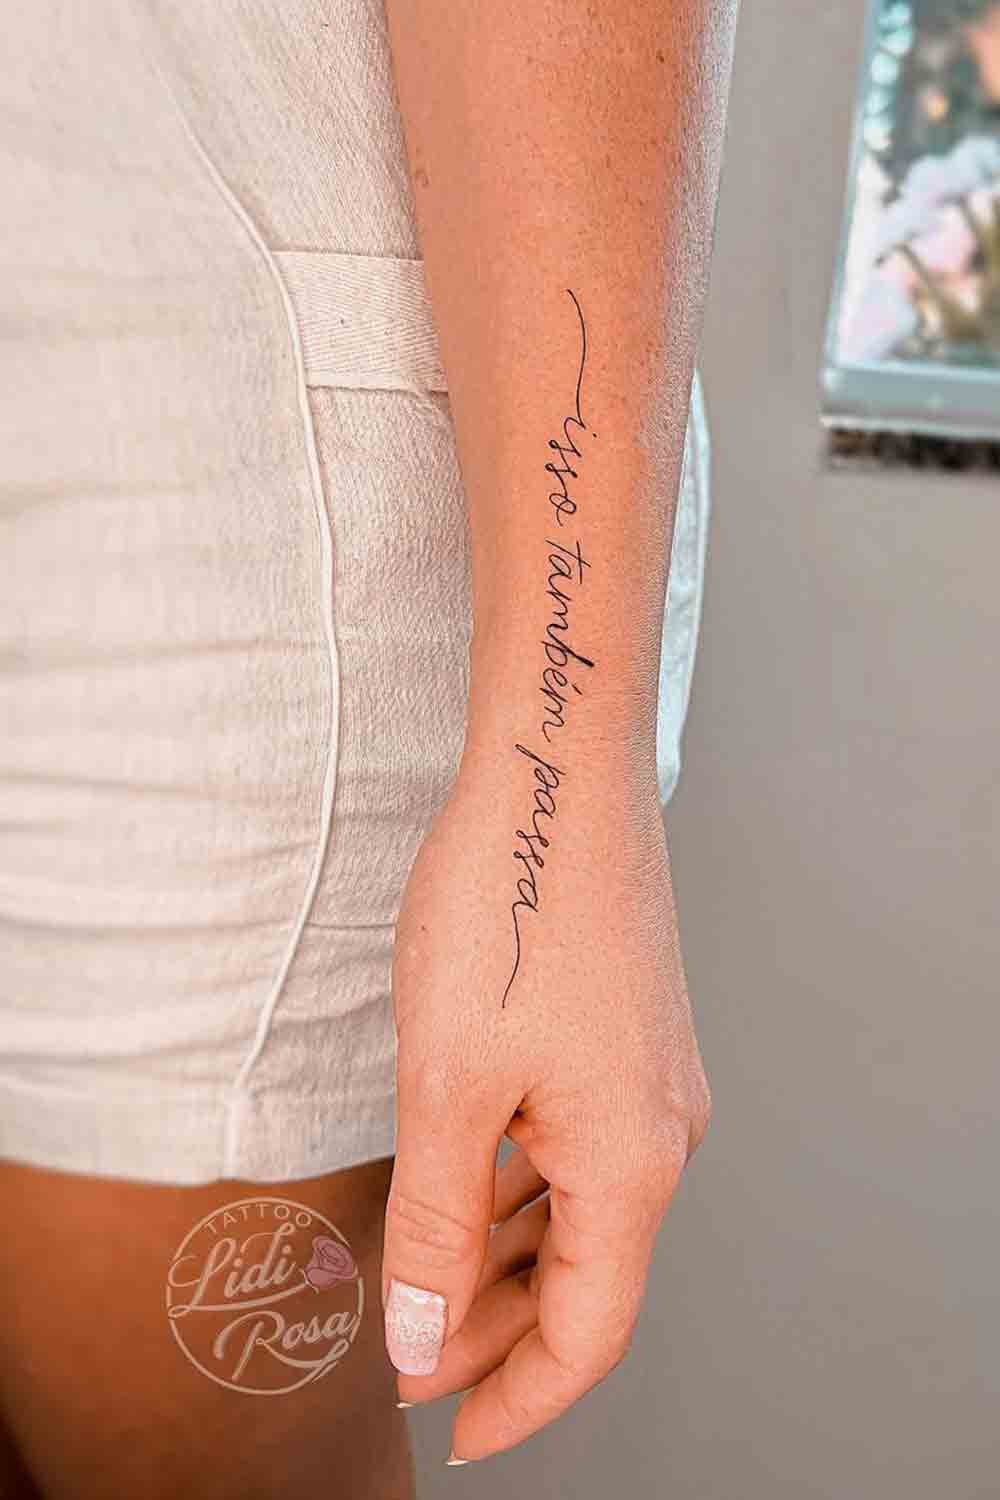 tatuagem-feminina-no-braco-escrito-isso-tambem-passa 